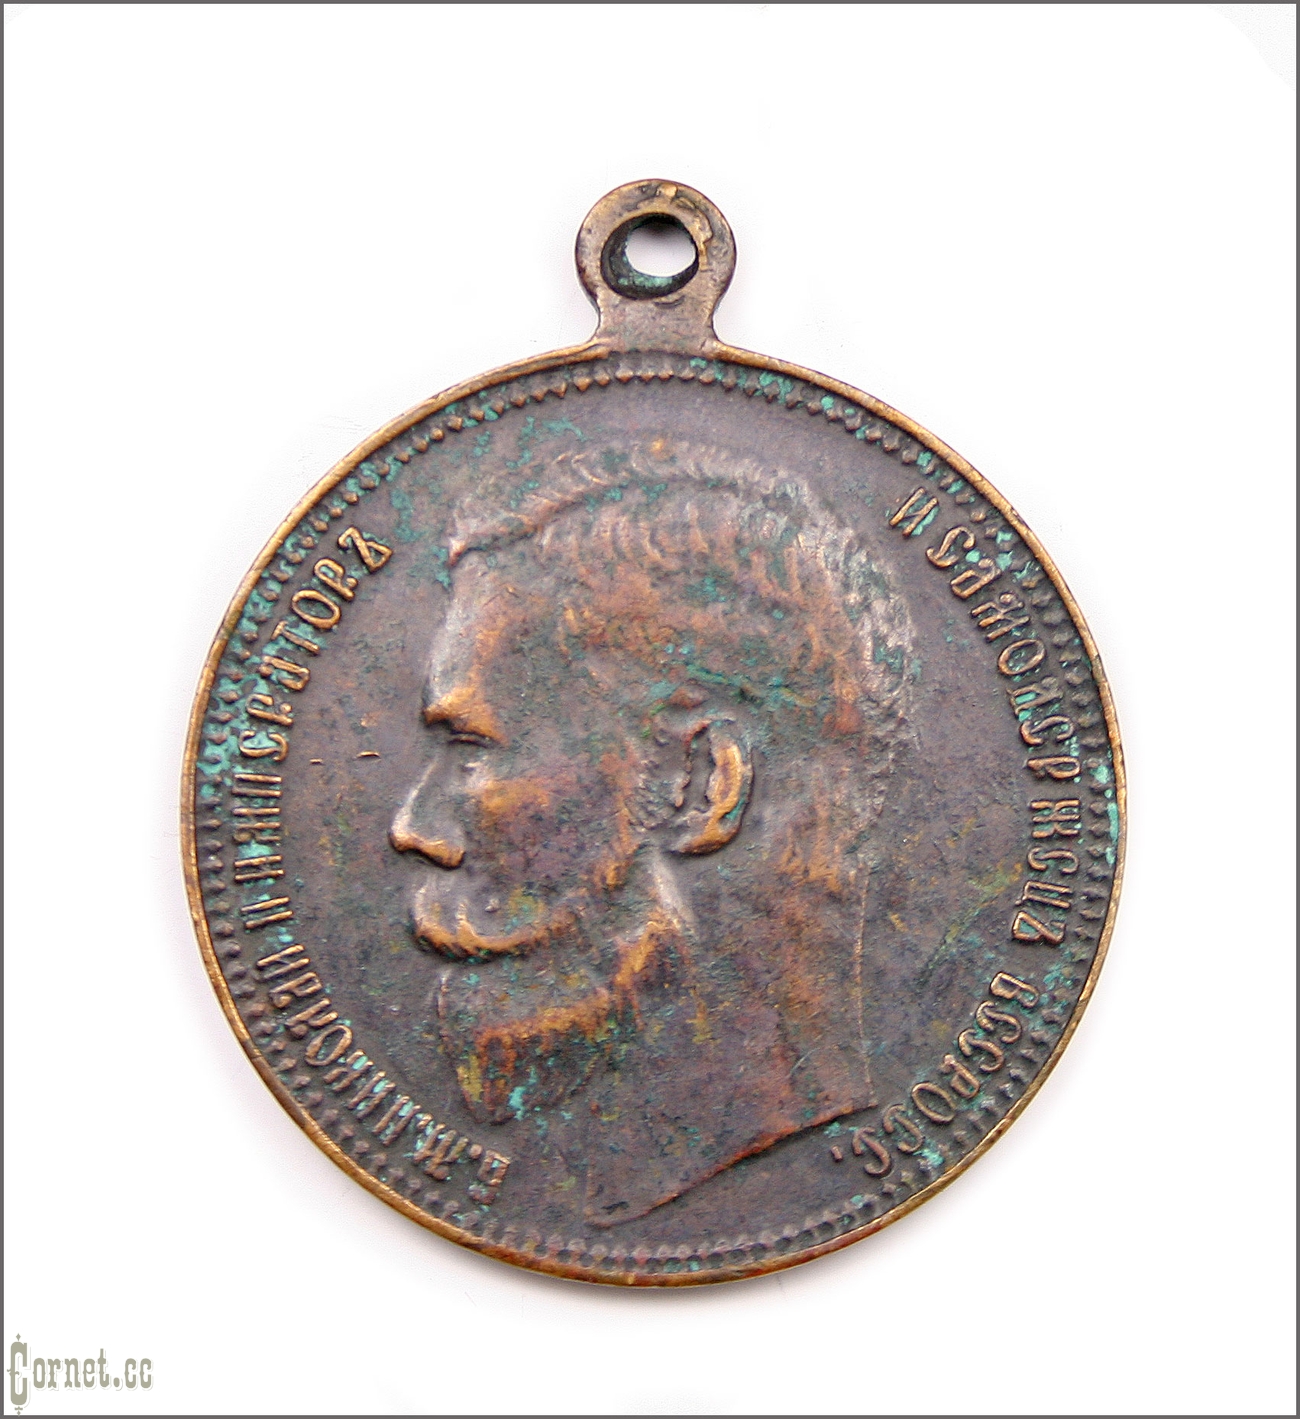 Medal "For Zeal"